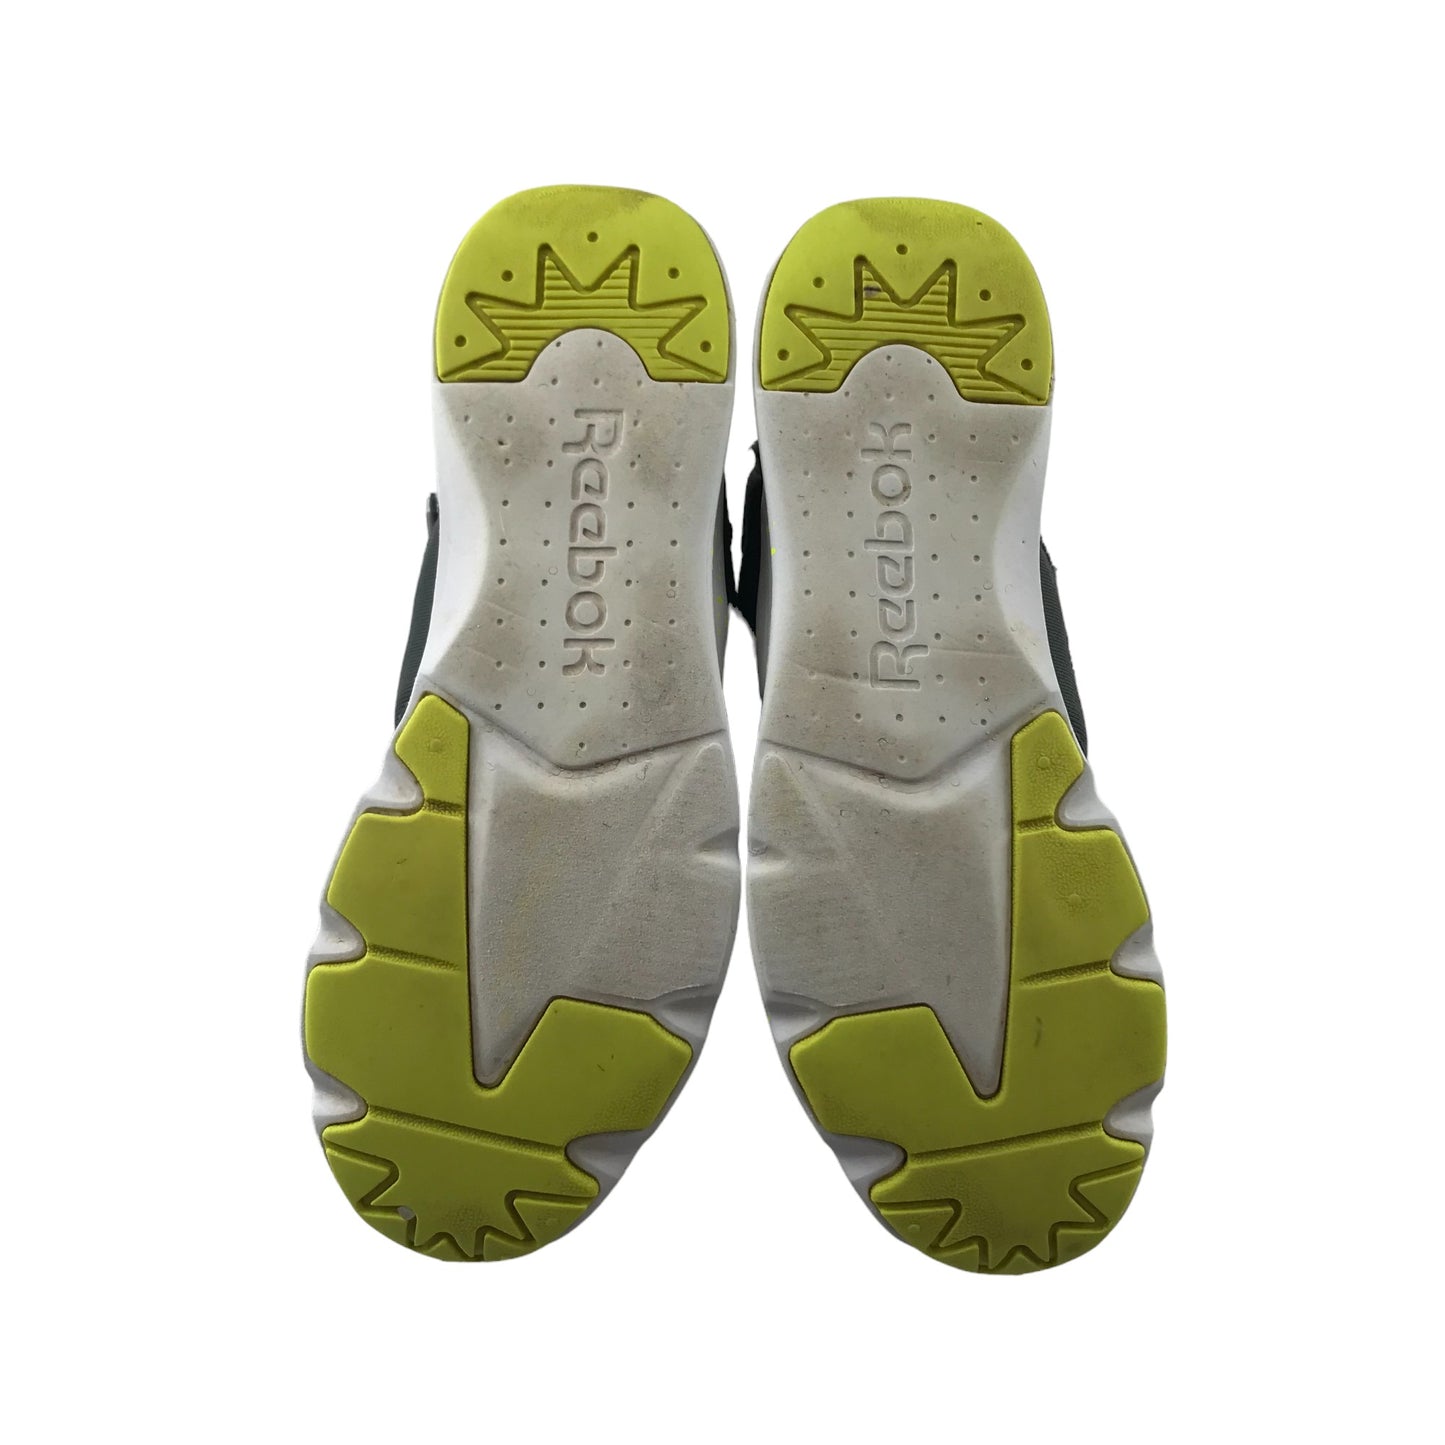 Reebok Trainers Shoe Size 7 Black Grey Floral Open Sides